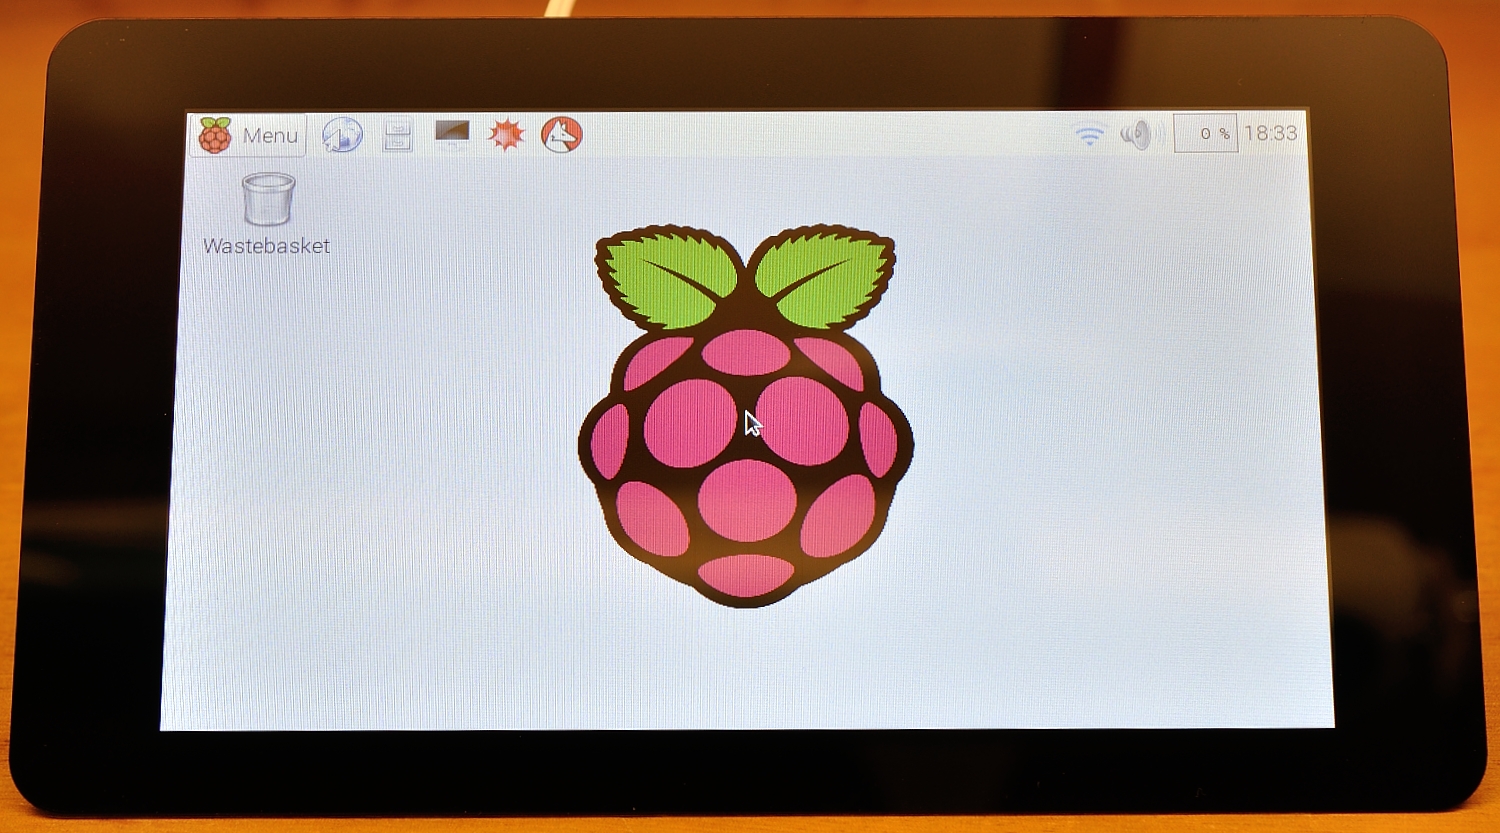 Official Raspberry Pi DSI screen